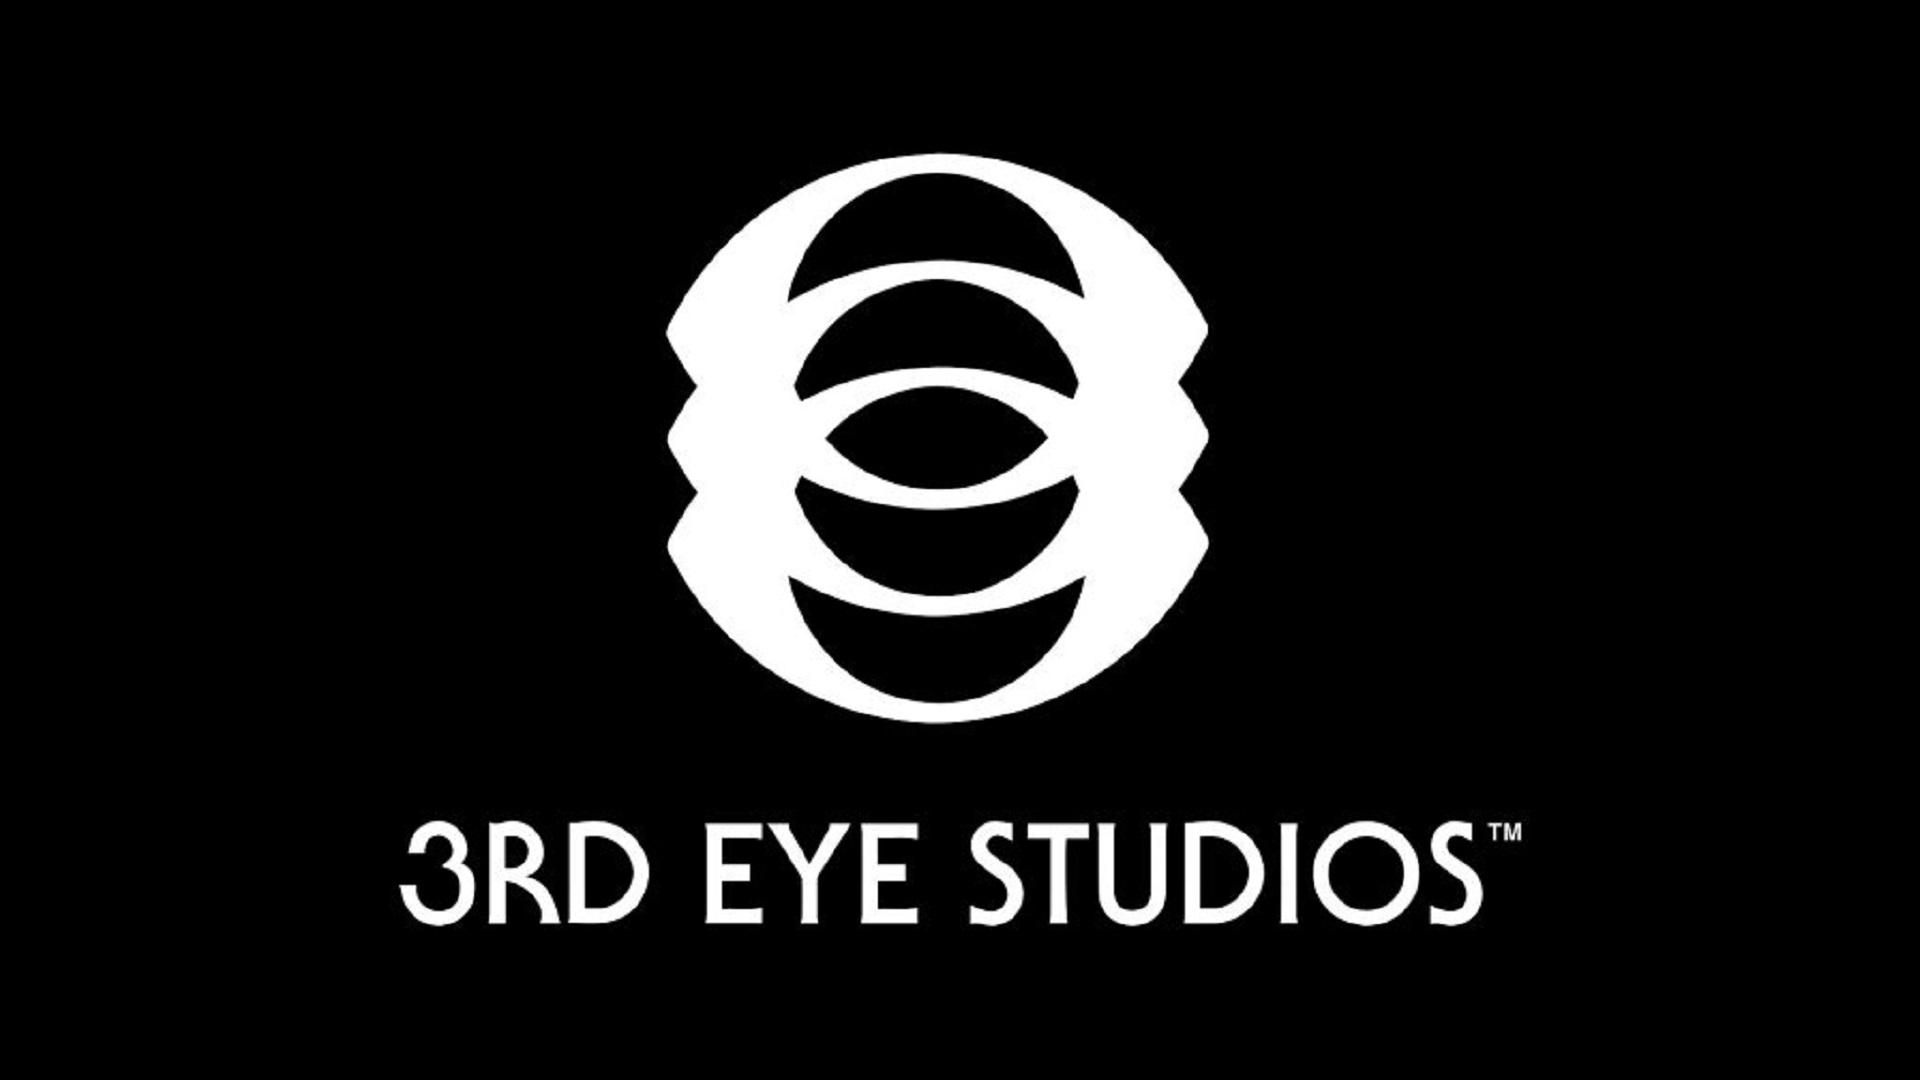 3rd-eye-studios-nhan-duoc-quy-dau-tu-1-trieu-usd-tin-game